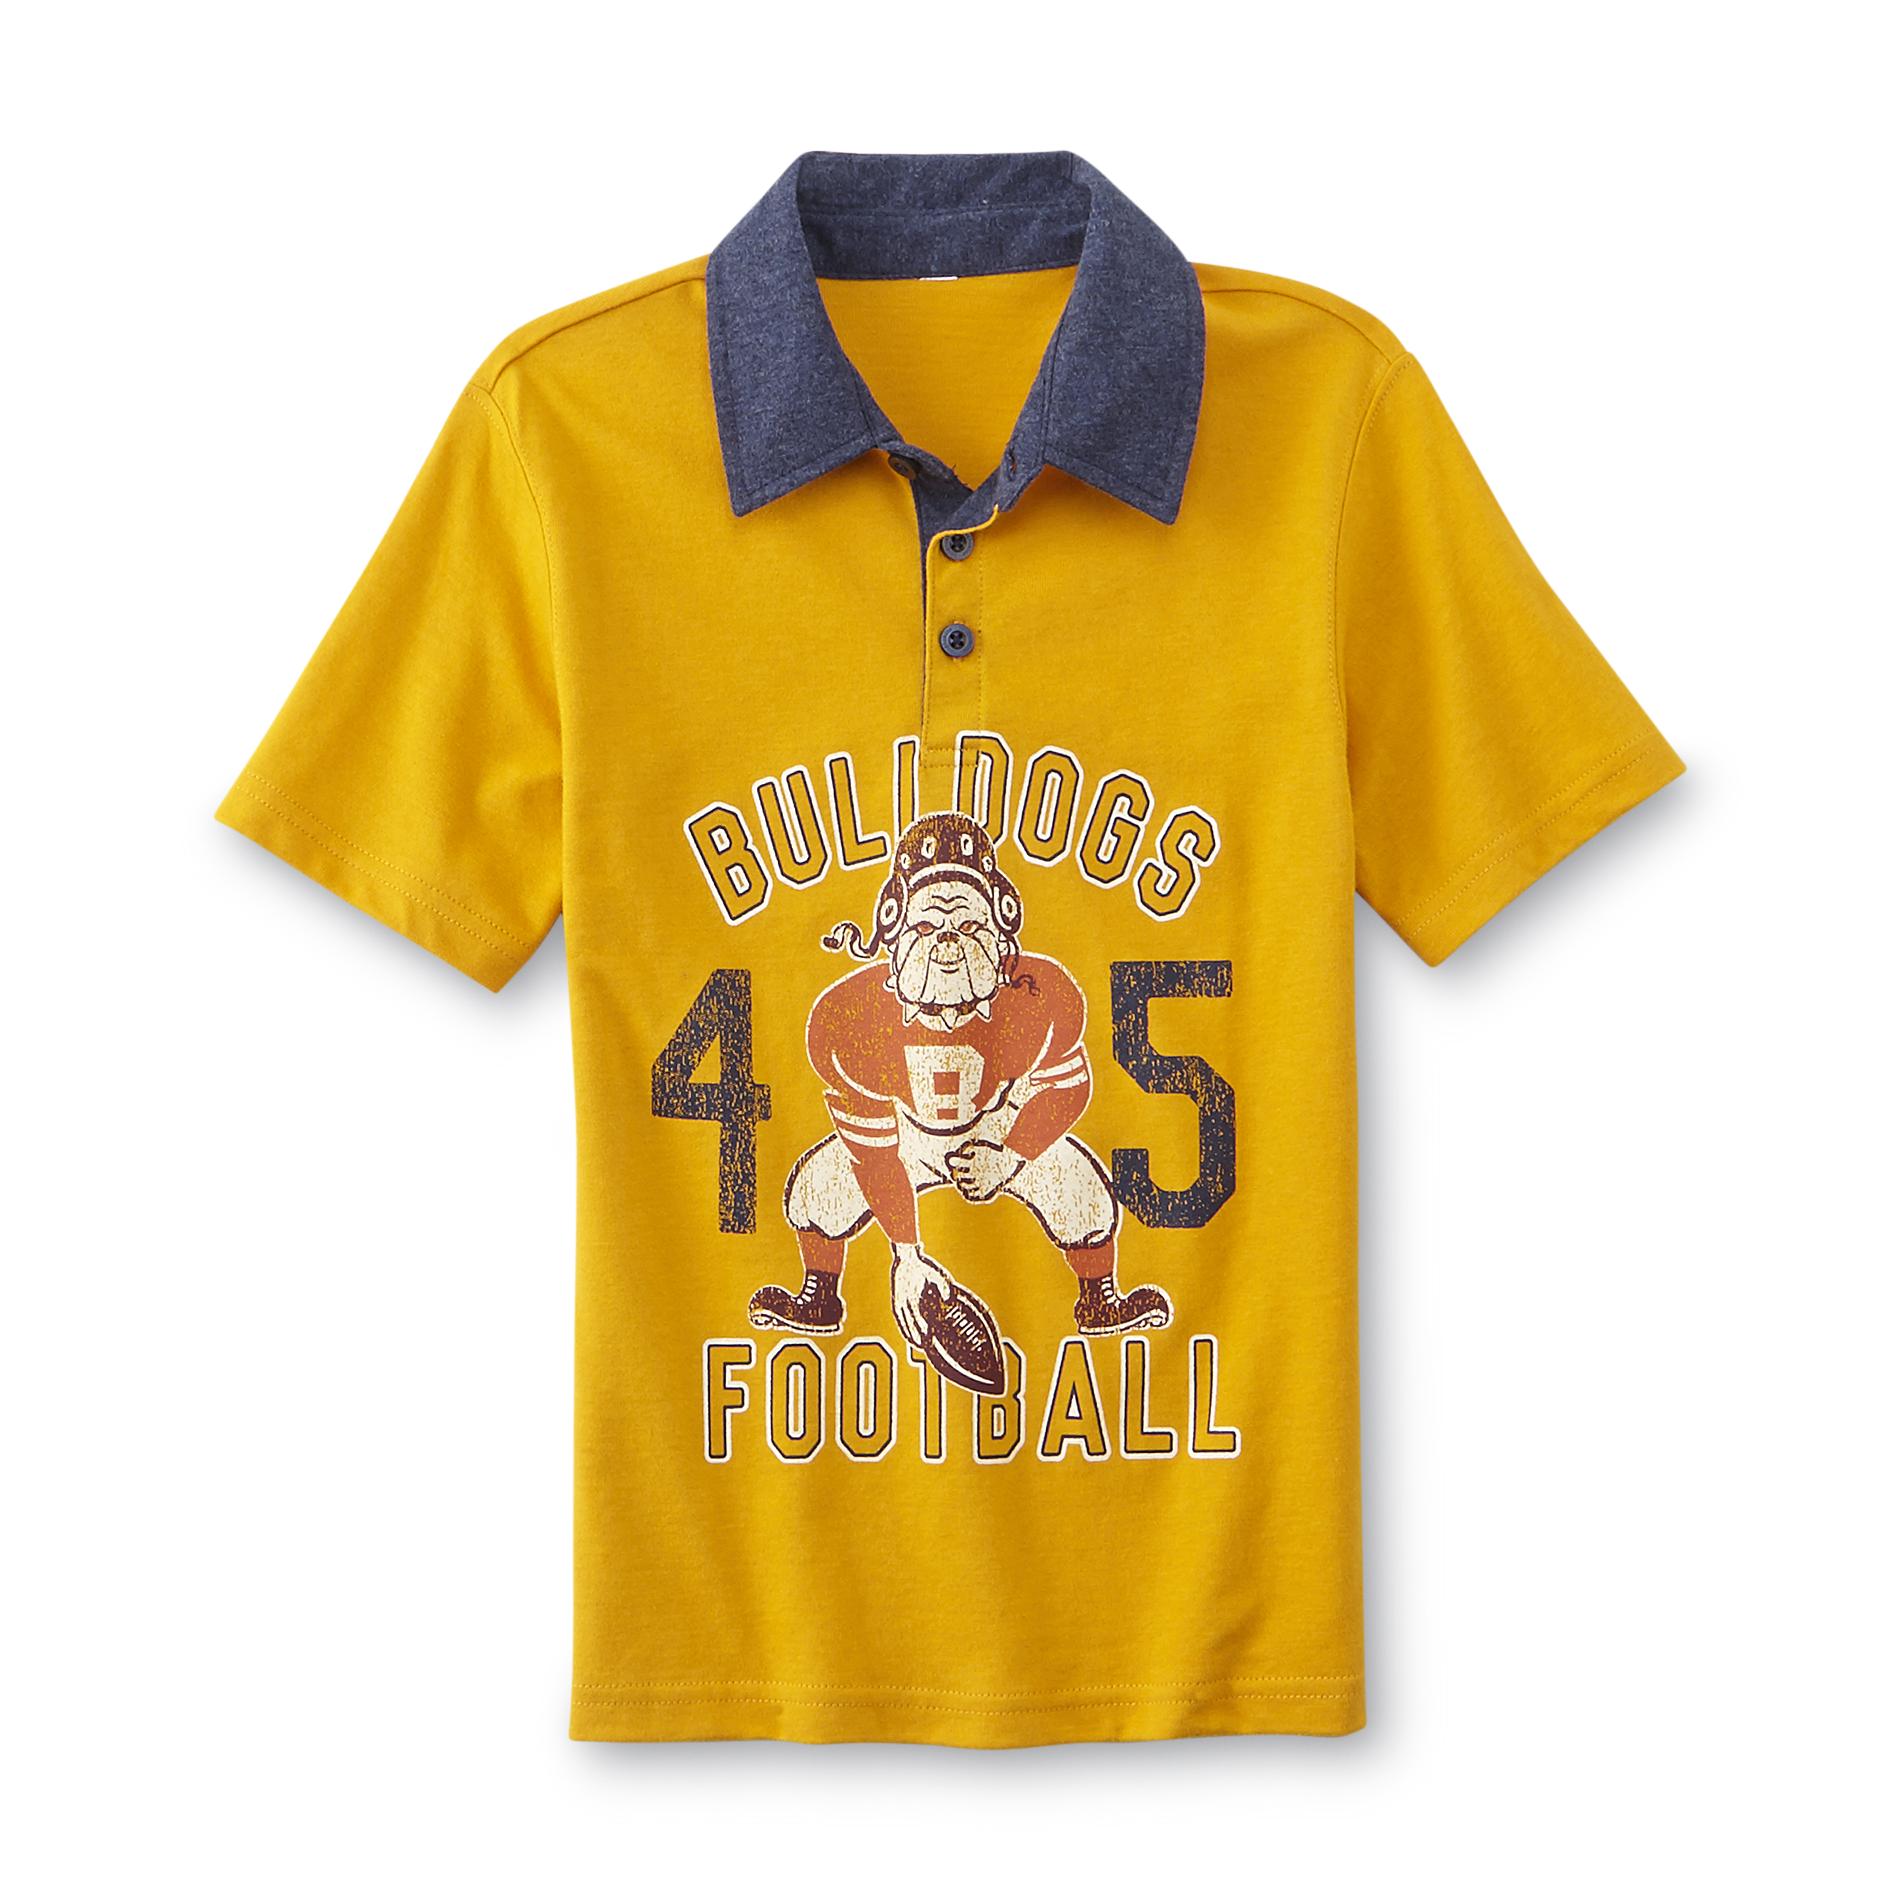 Toughskins Infant & Toddler Boy's Polo Shirt - Bulldogs Football